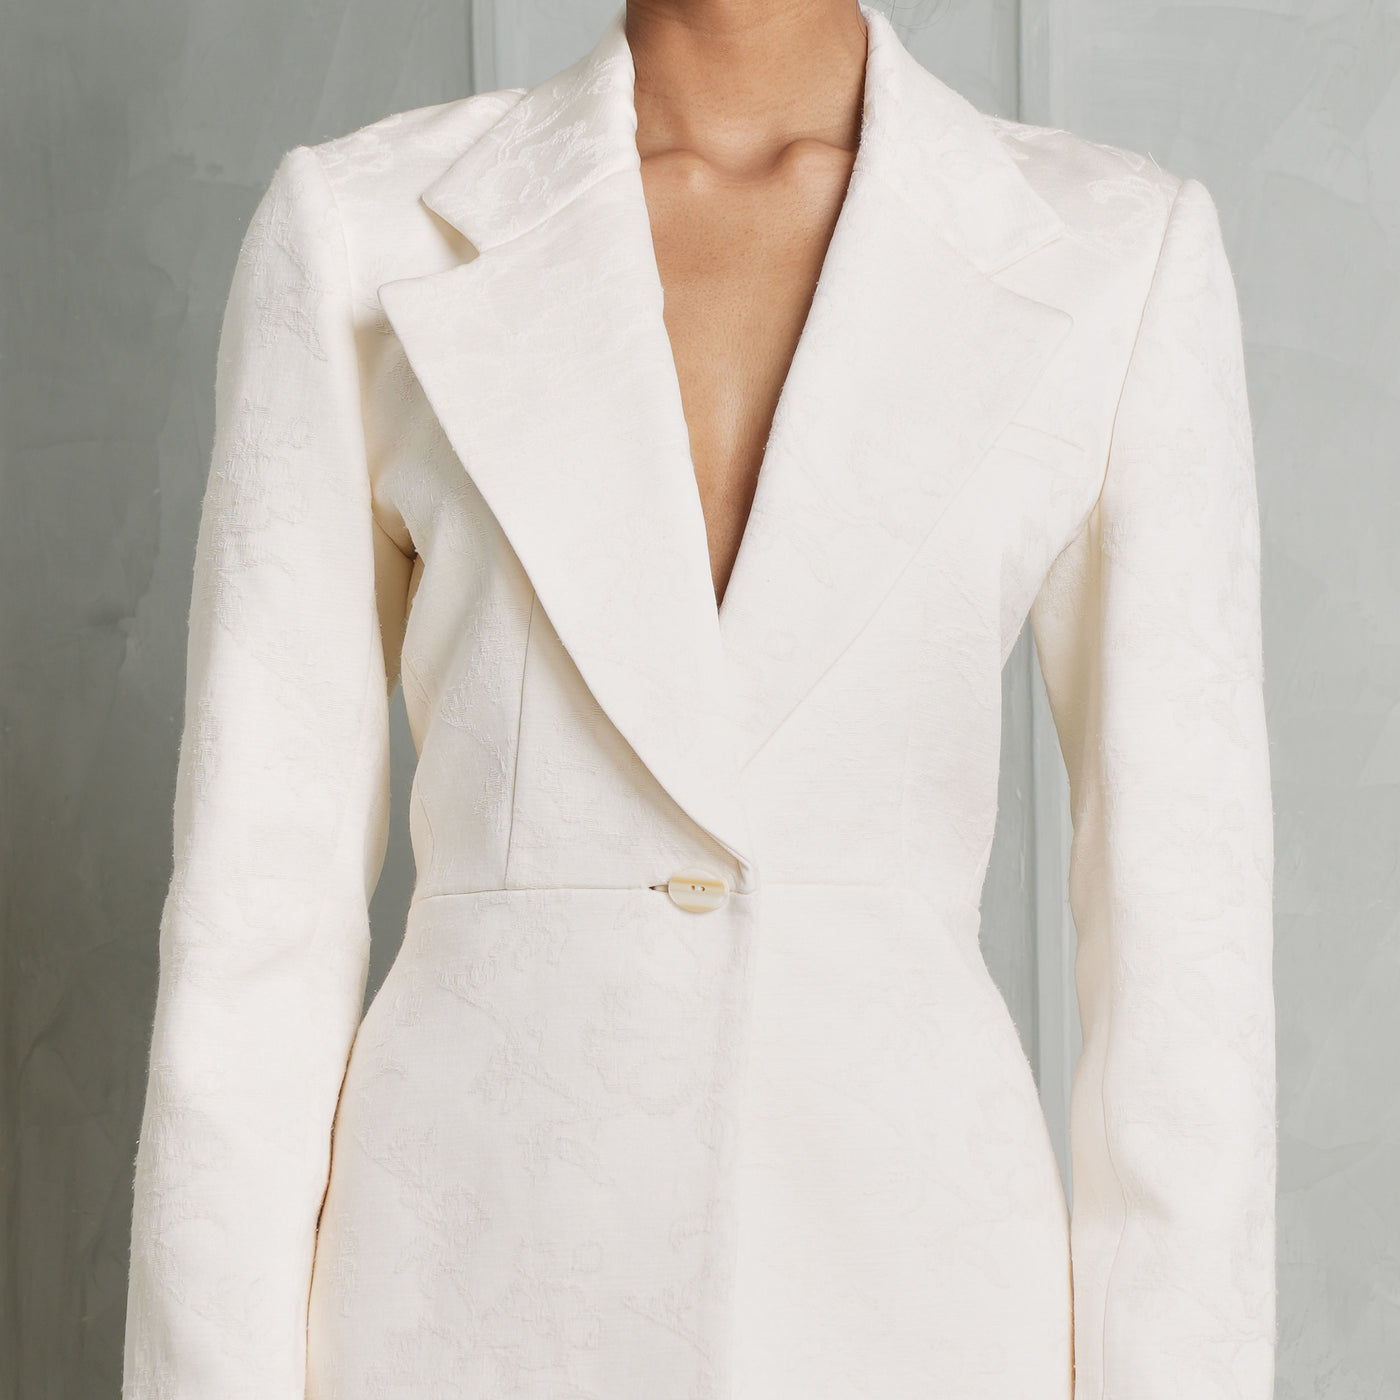 ALEXIS Ivory brocade white varo jacket